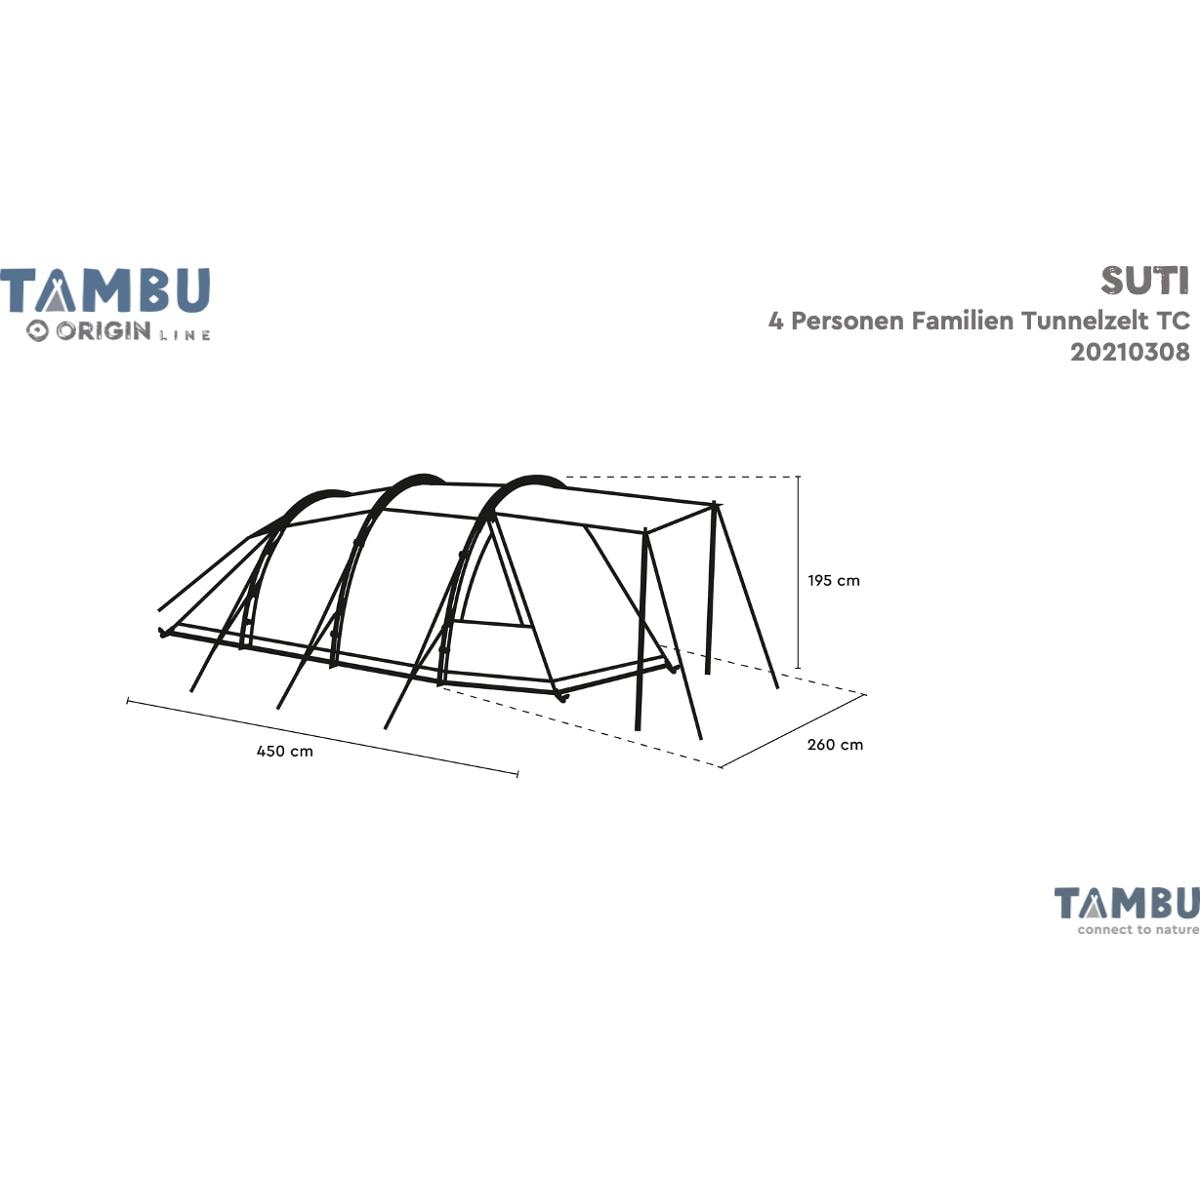 grau/blau 4 TC, bei Tambu Familien Camping Tunnelzelt Suti 450x260x195cm, Campingzubehör Personen, Wagner